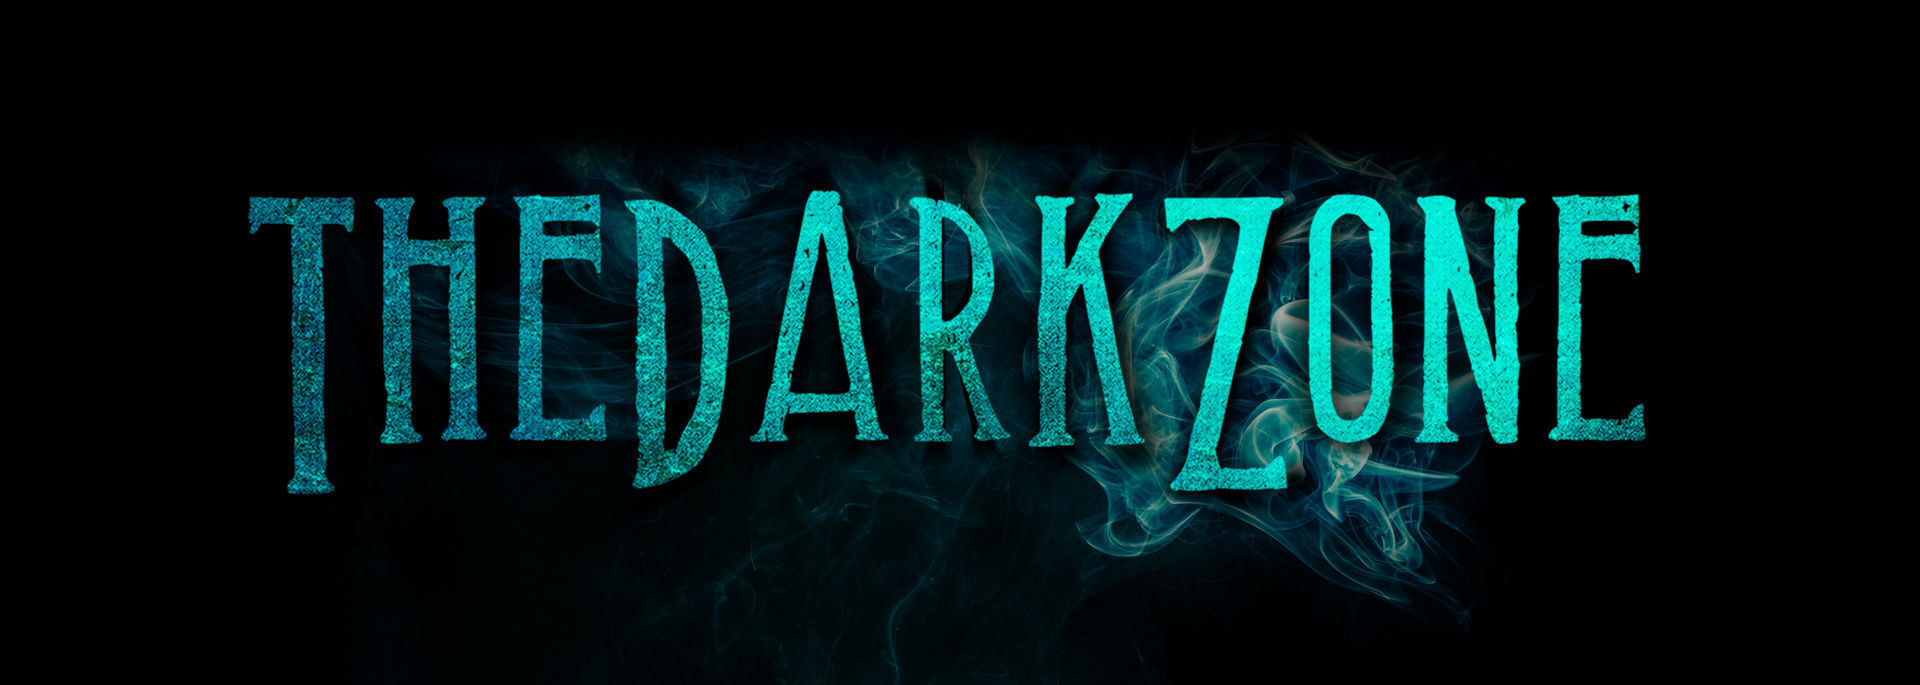 Dark Zone Preview Channel channel